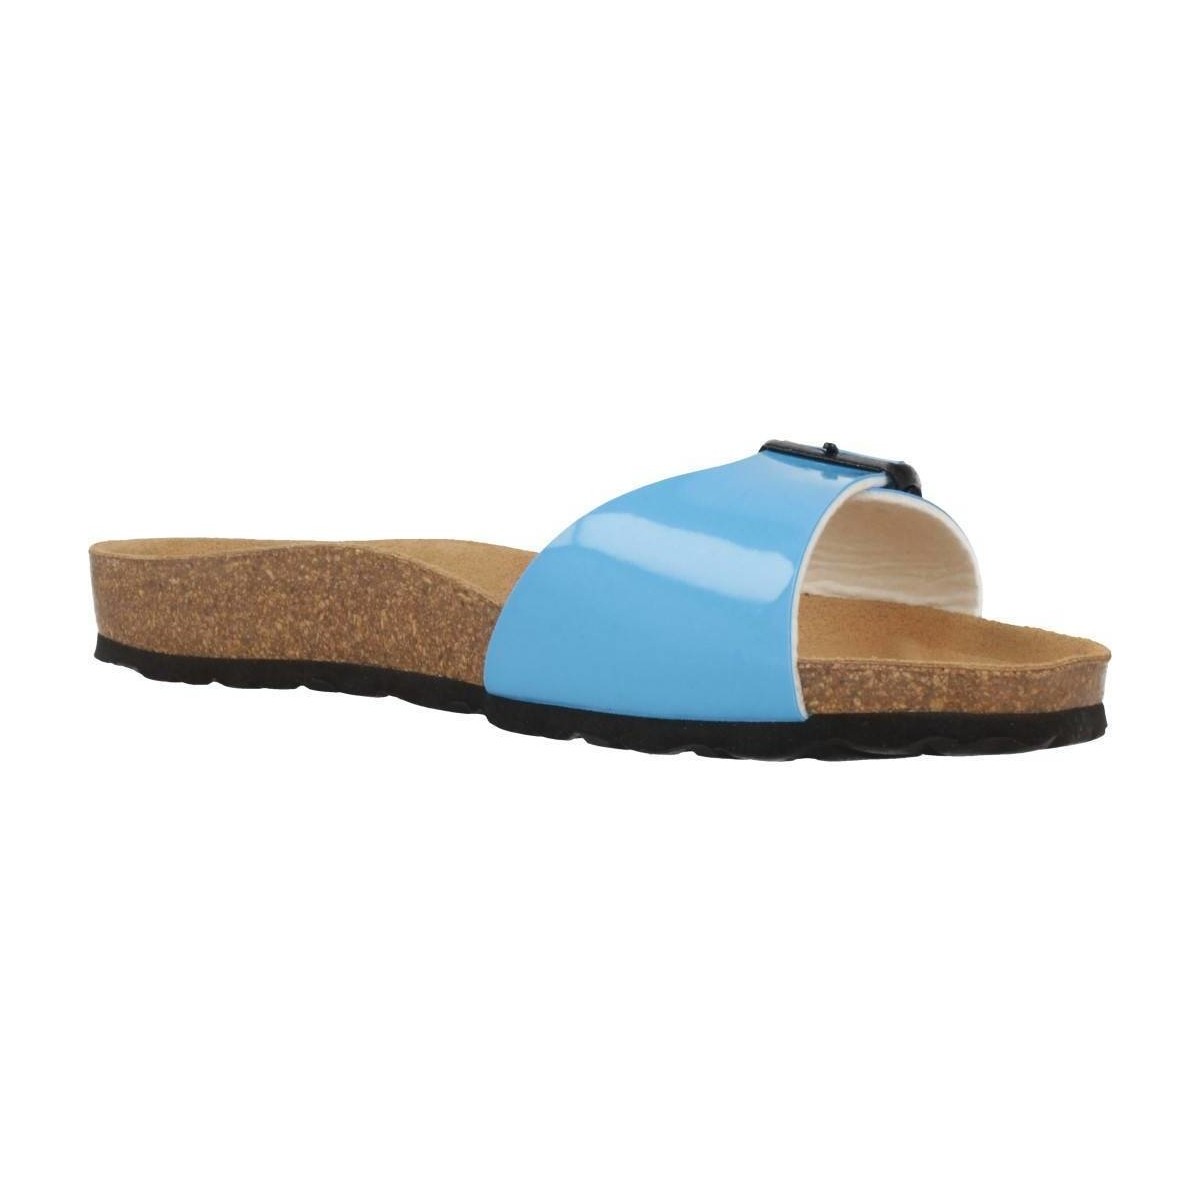 Čevlji  Ženske Sandali & Odprti čevlji Antonio Miro 316601 Modra